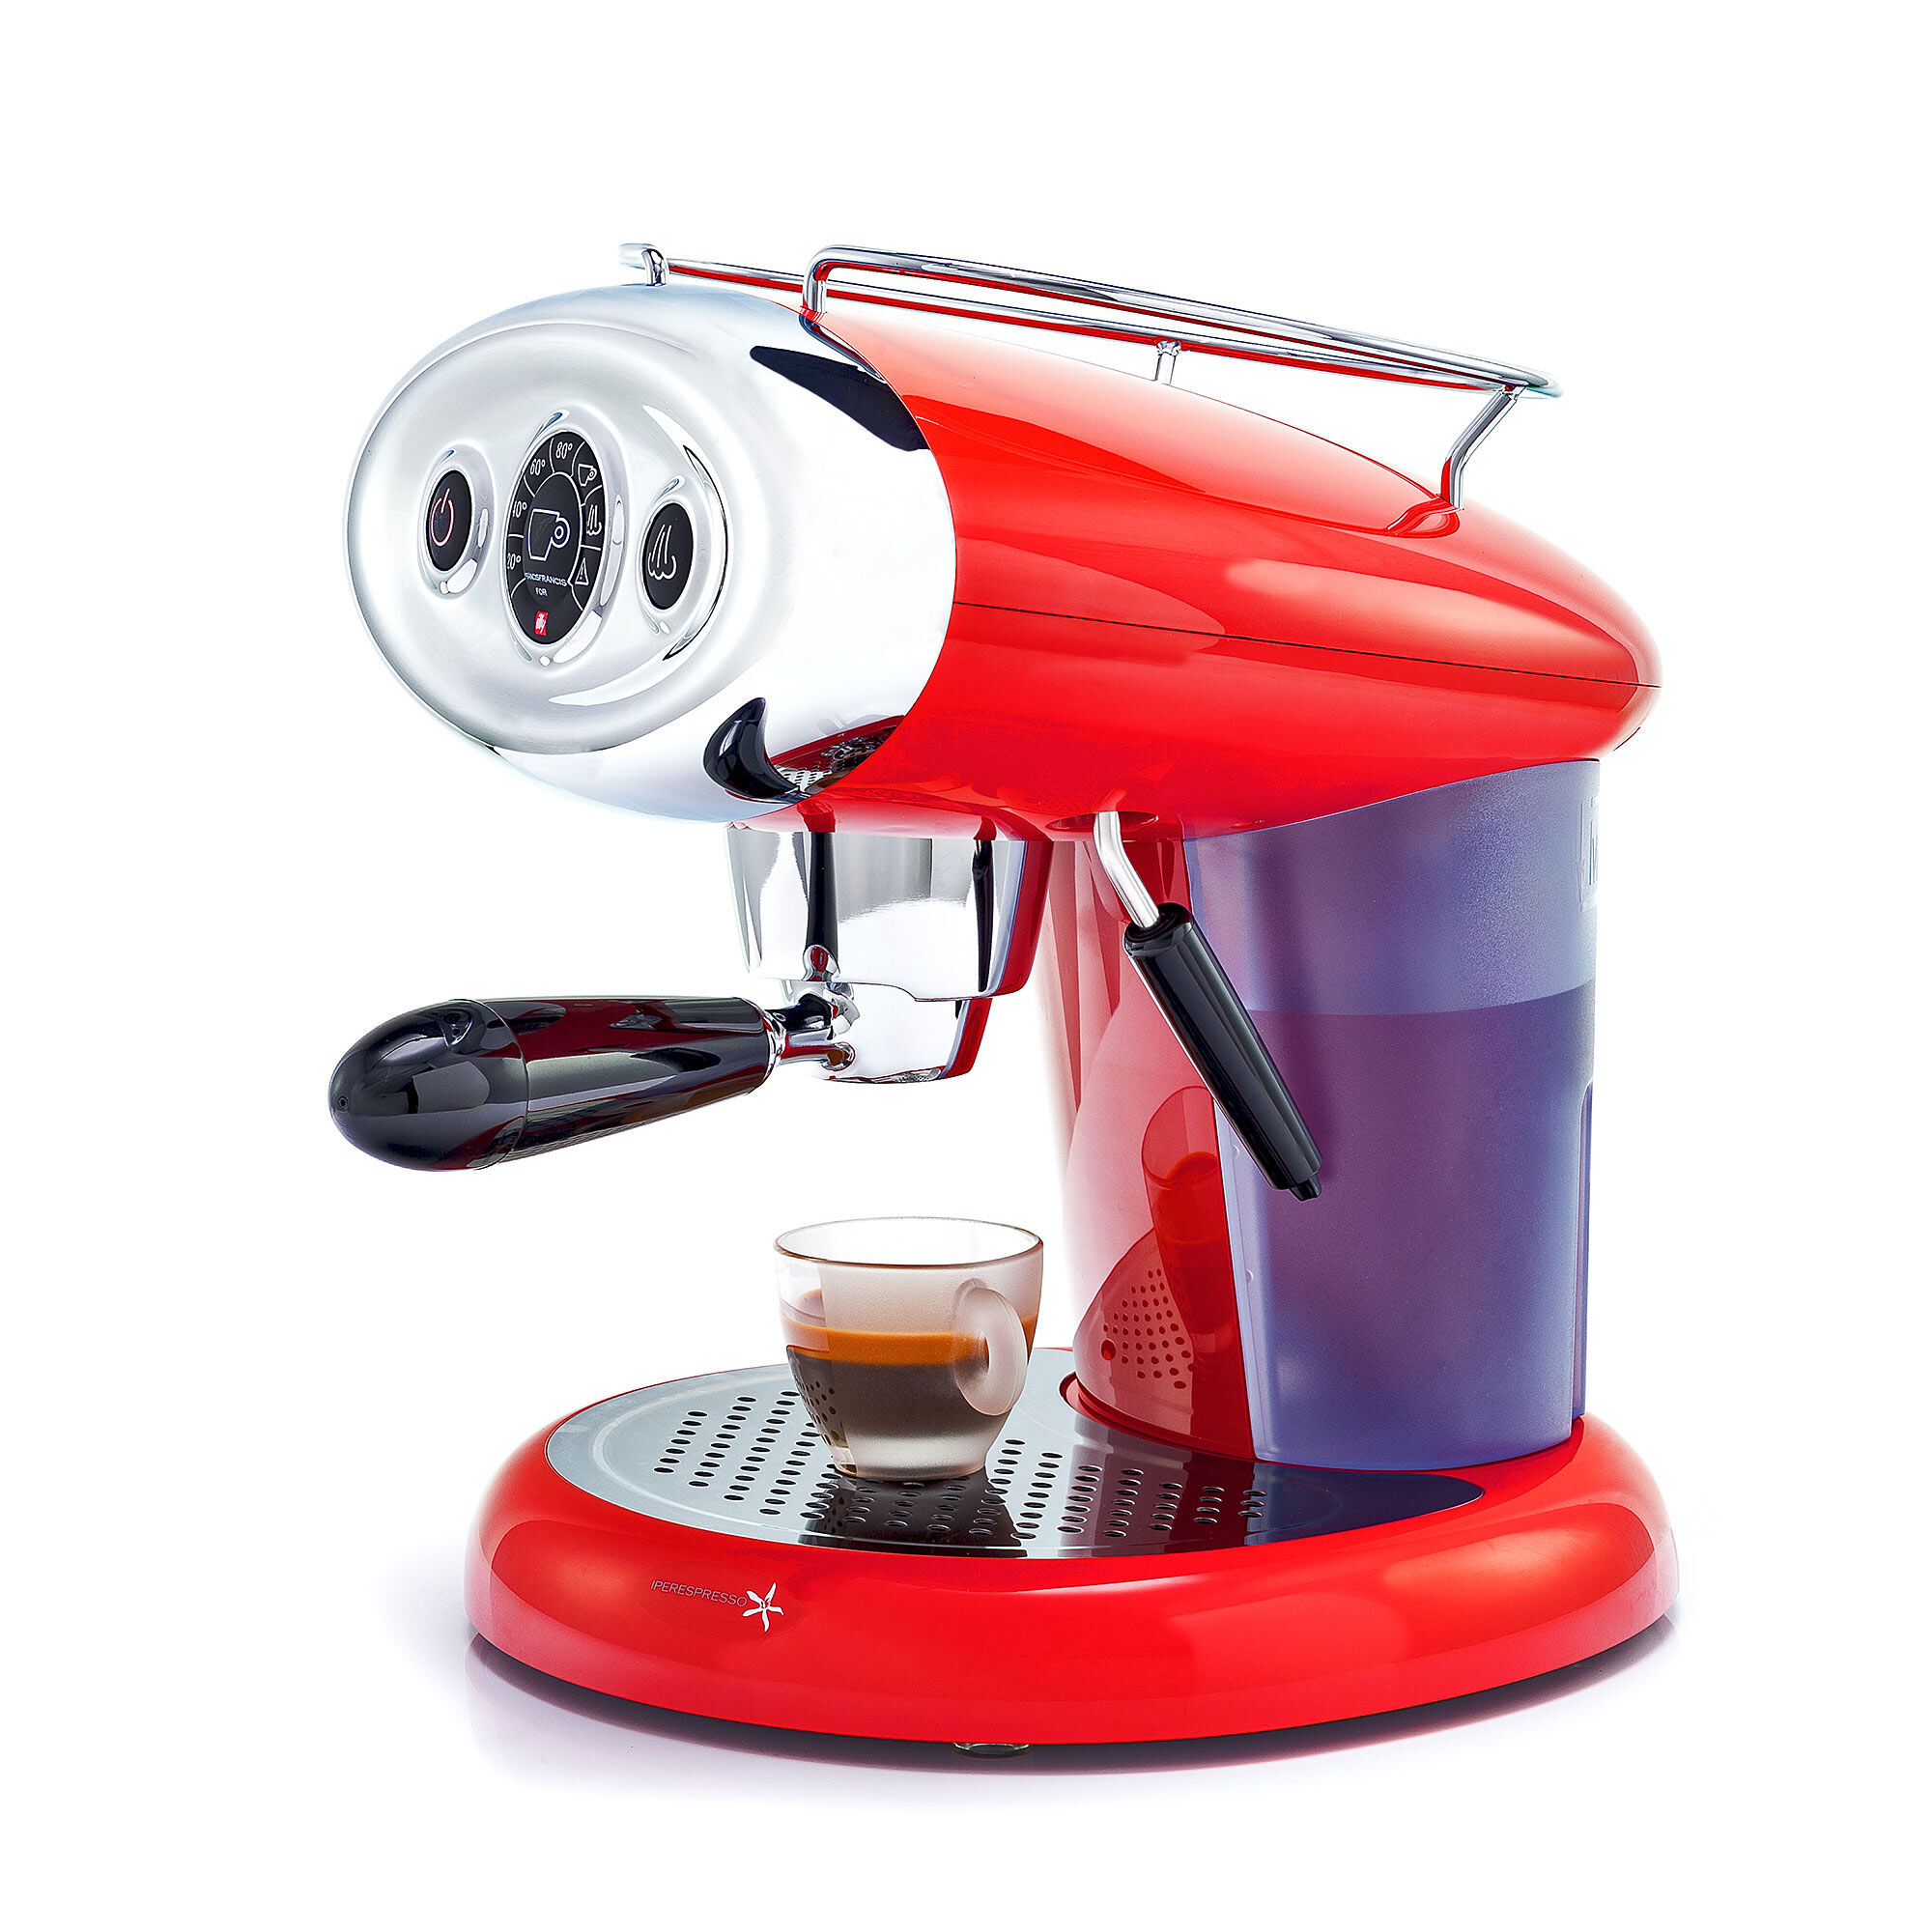 X7.1 – Iperespresso koffiemachine